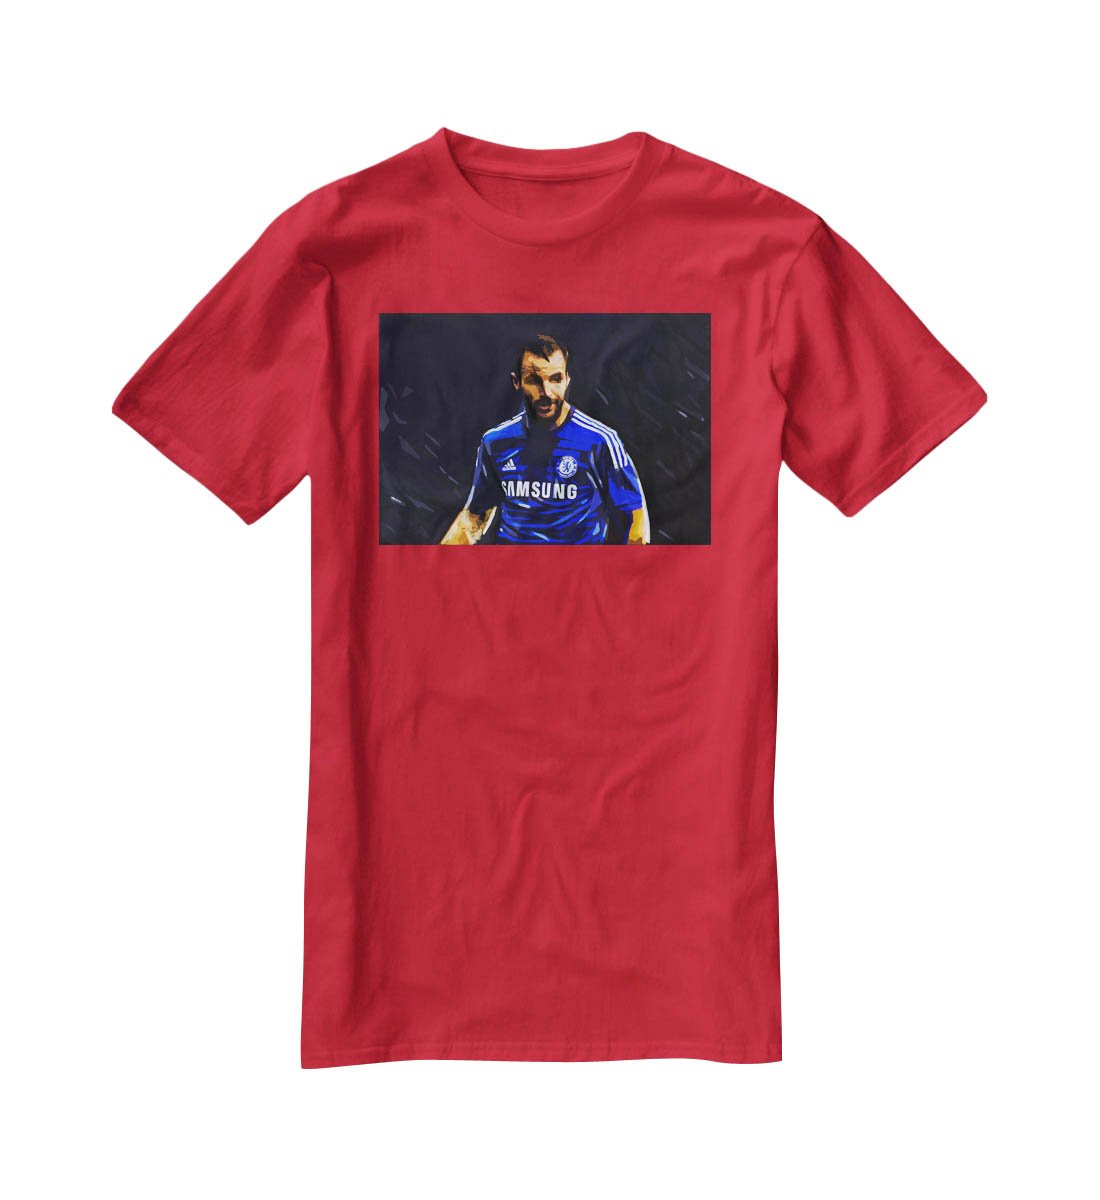 Cesc Fàbregas Chelsea shirt